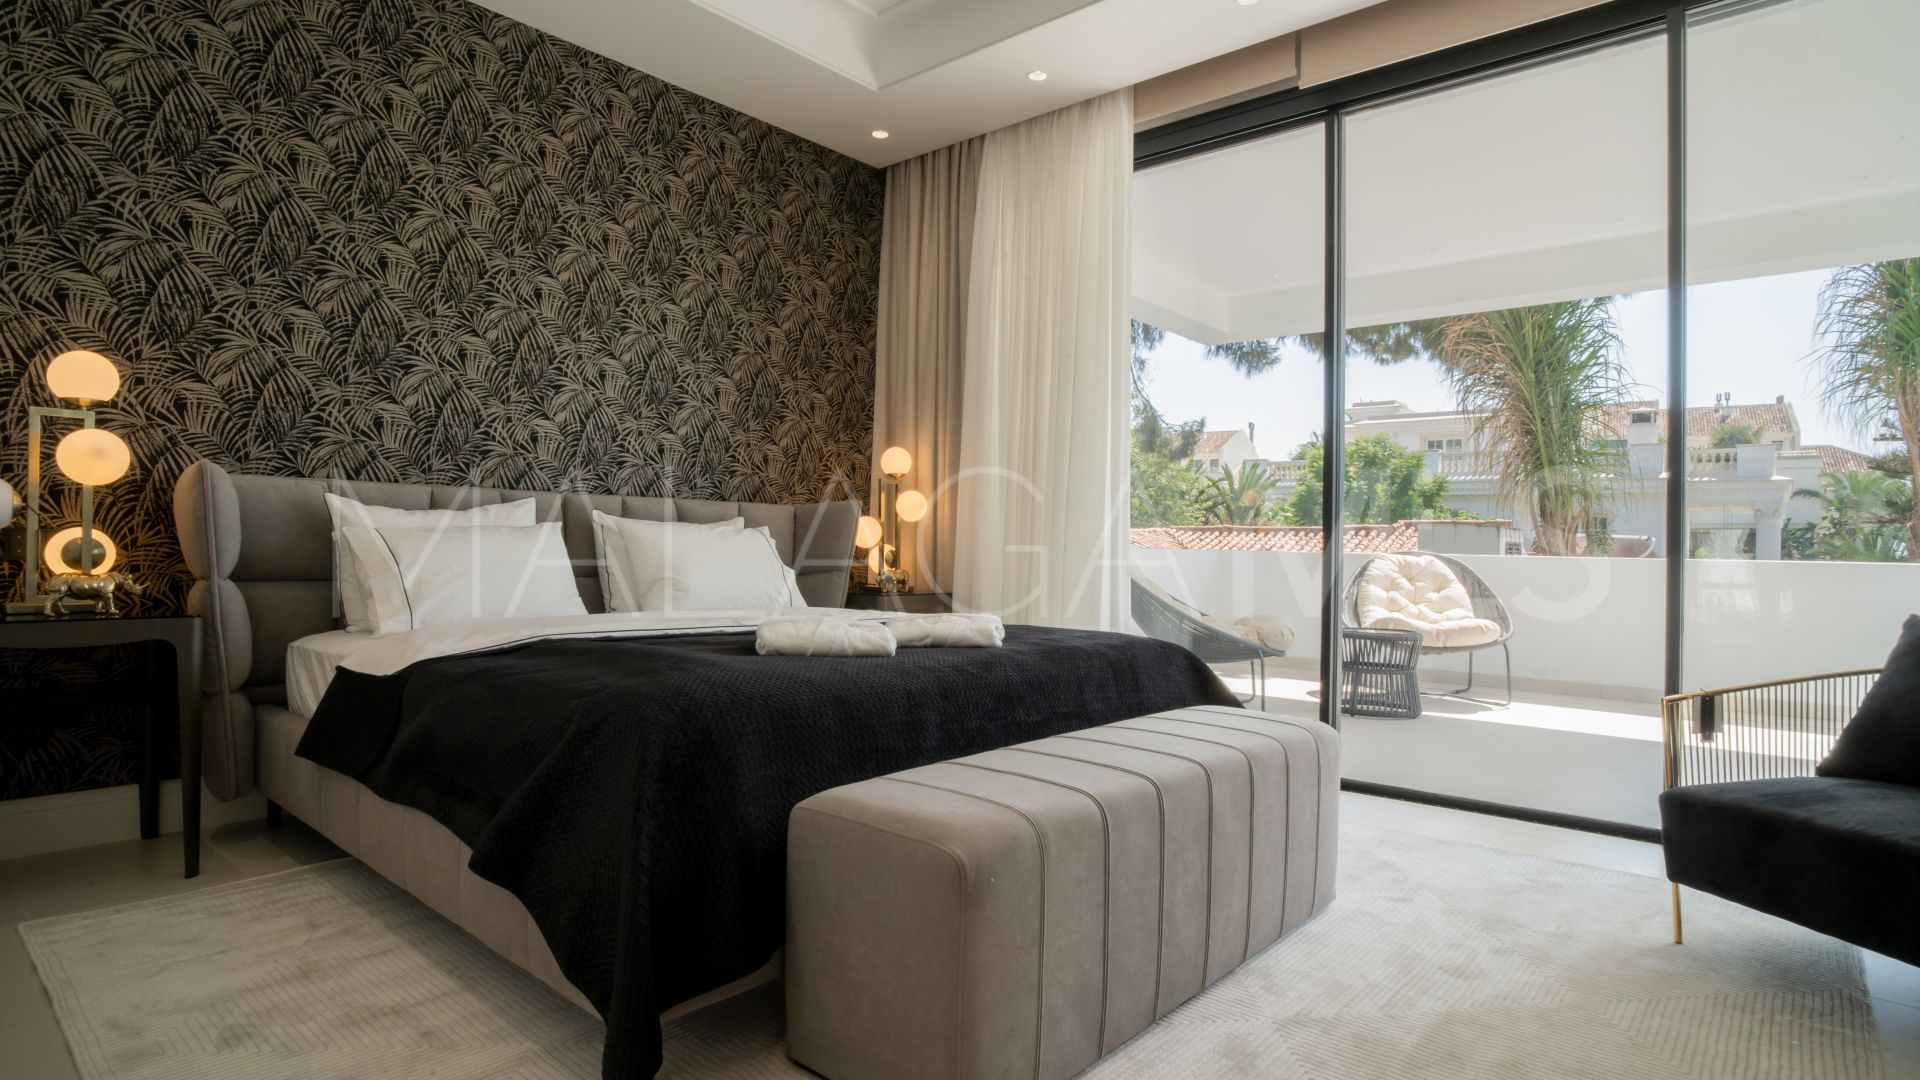 For sale villa in Rio Verde with 4 bedrooms